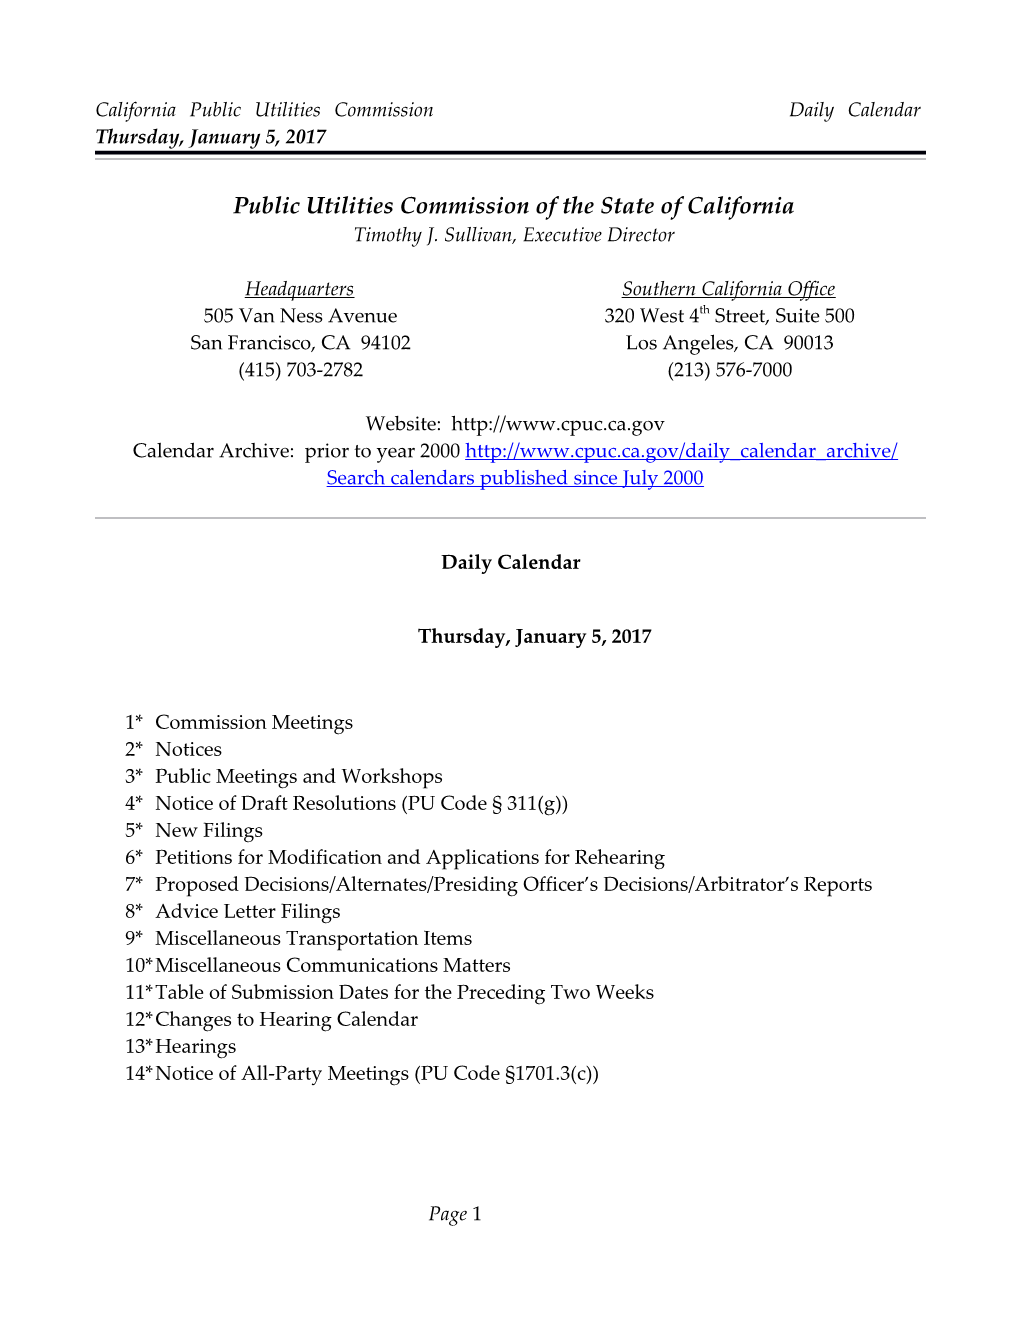 California Public Utilities Commission Daily Calendar Thursday, January 5, 2017